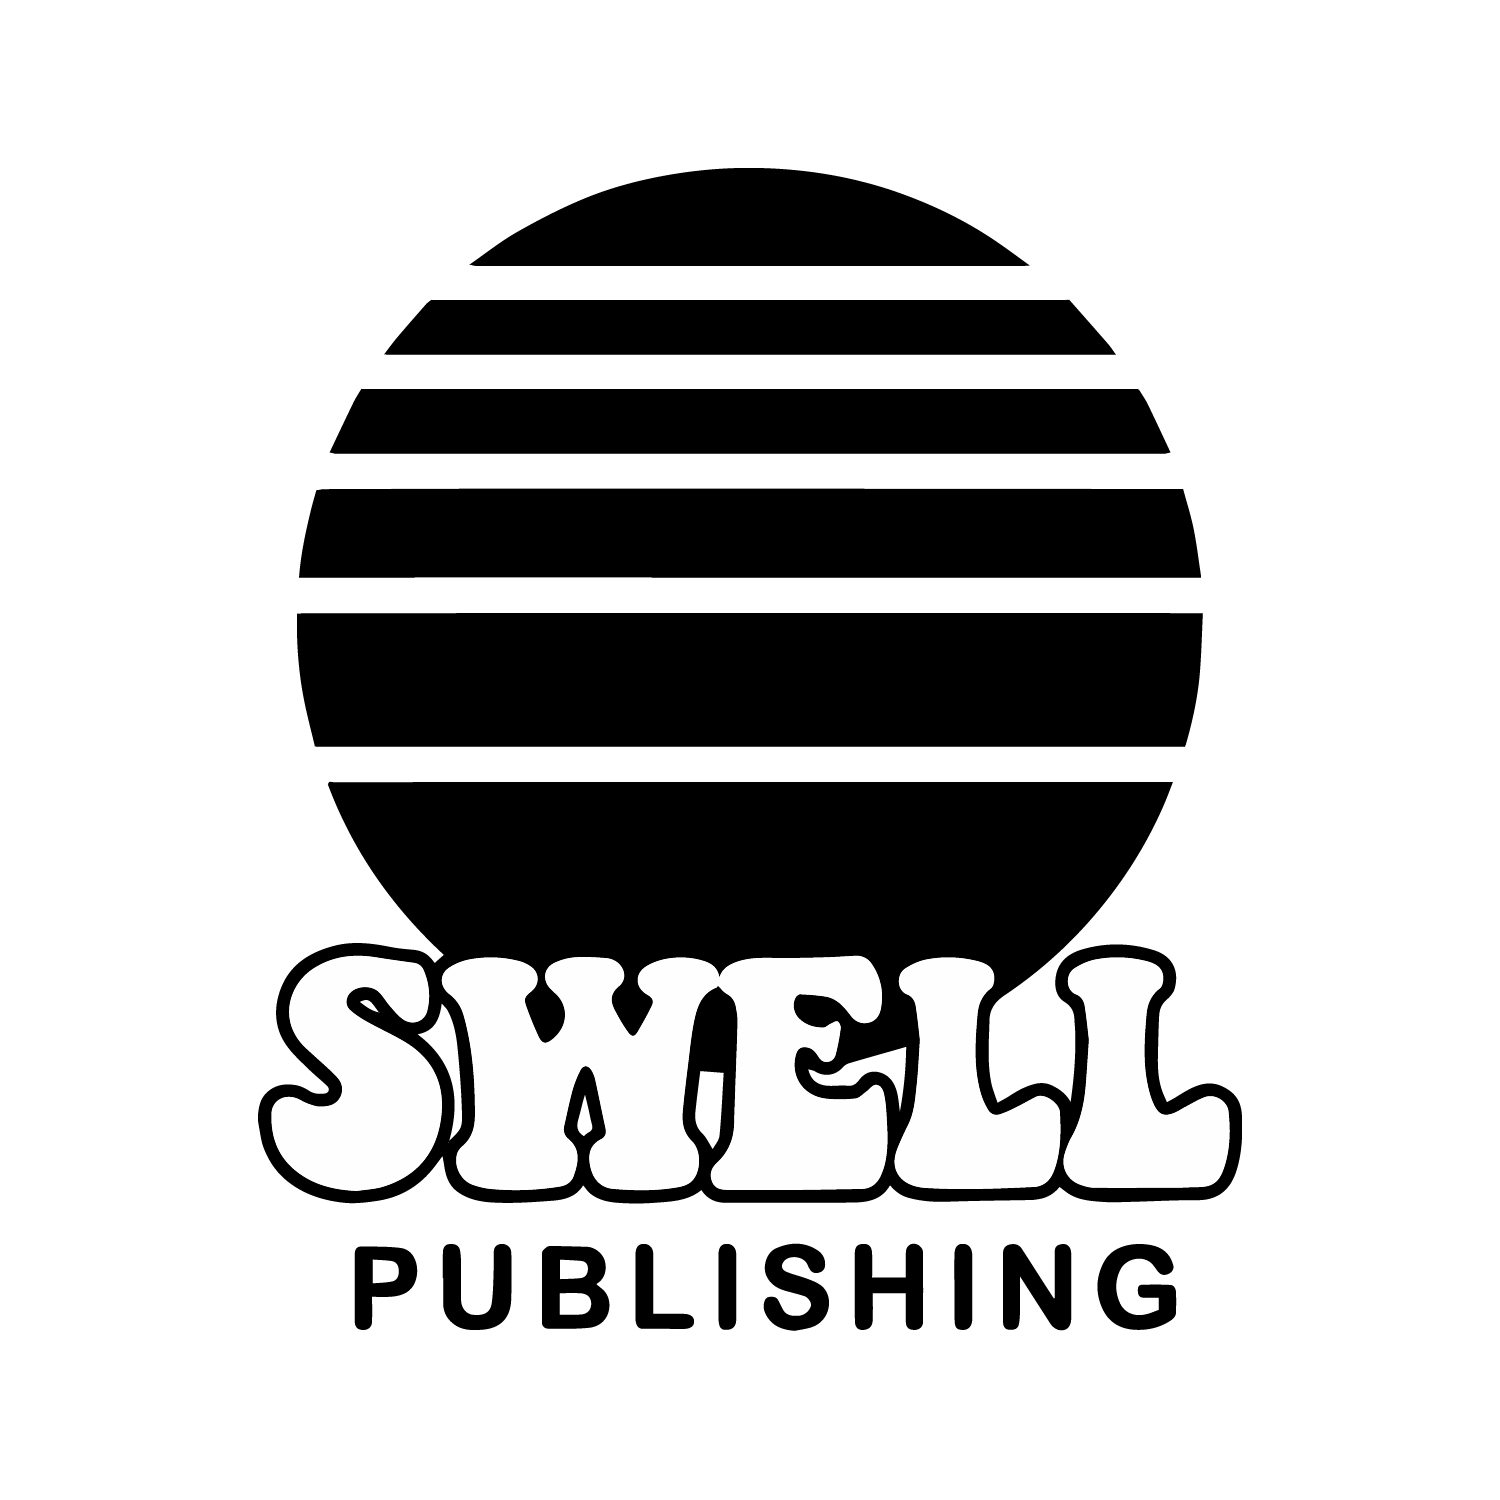 Swell Publishing